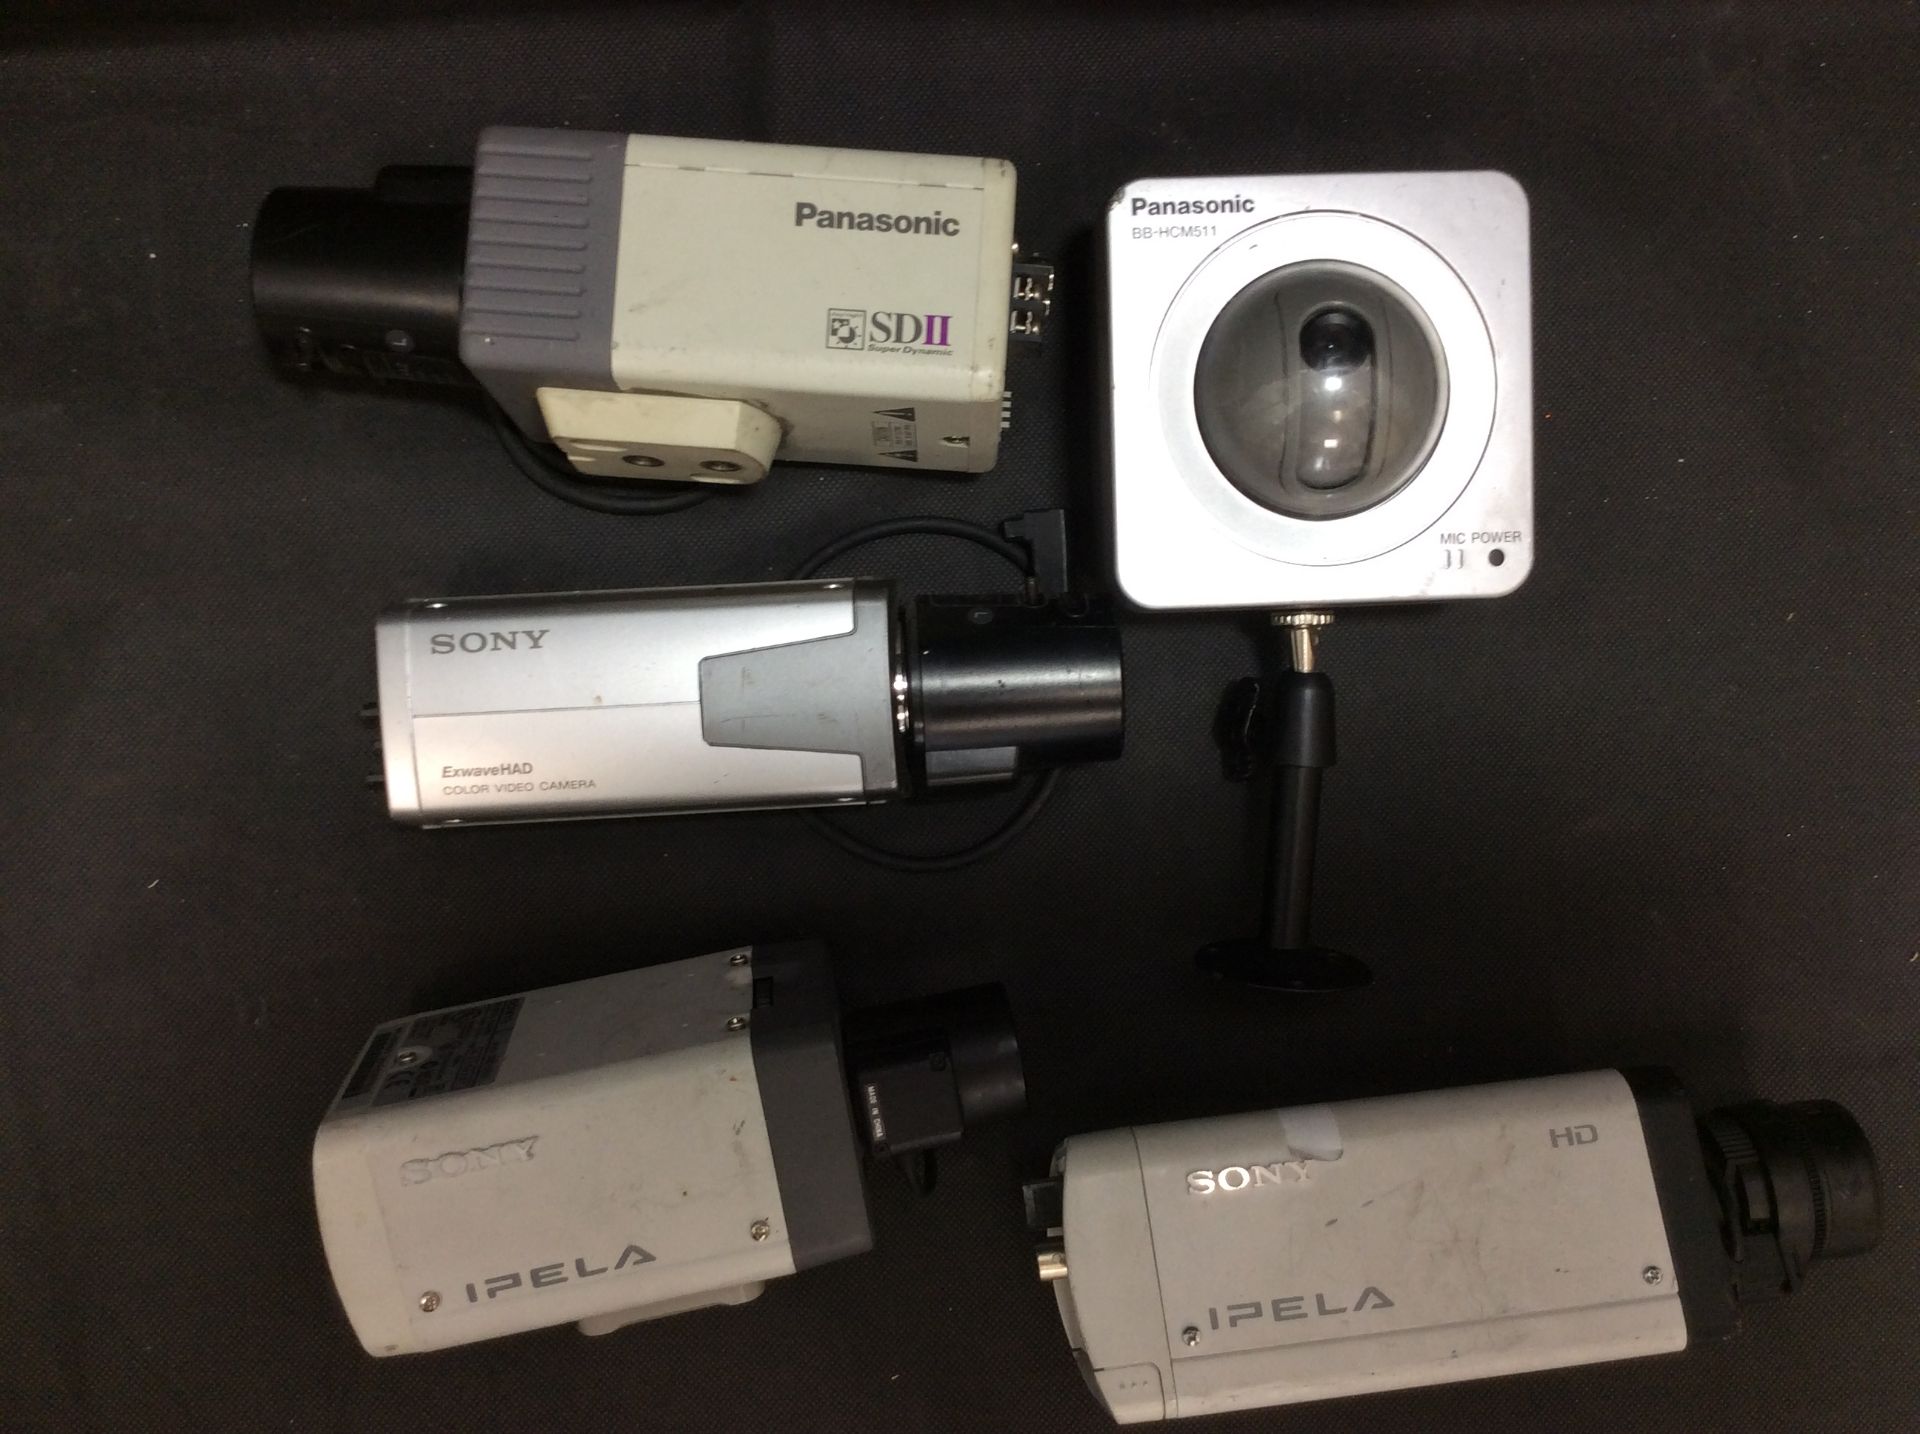 5x CCTV To Include Sony SNC-CH140